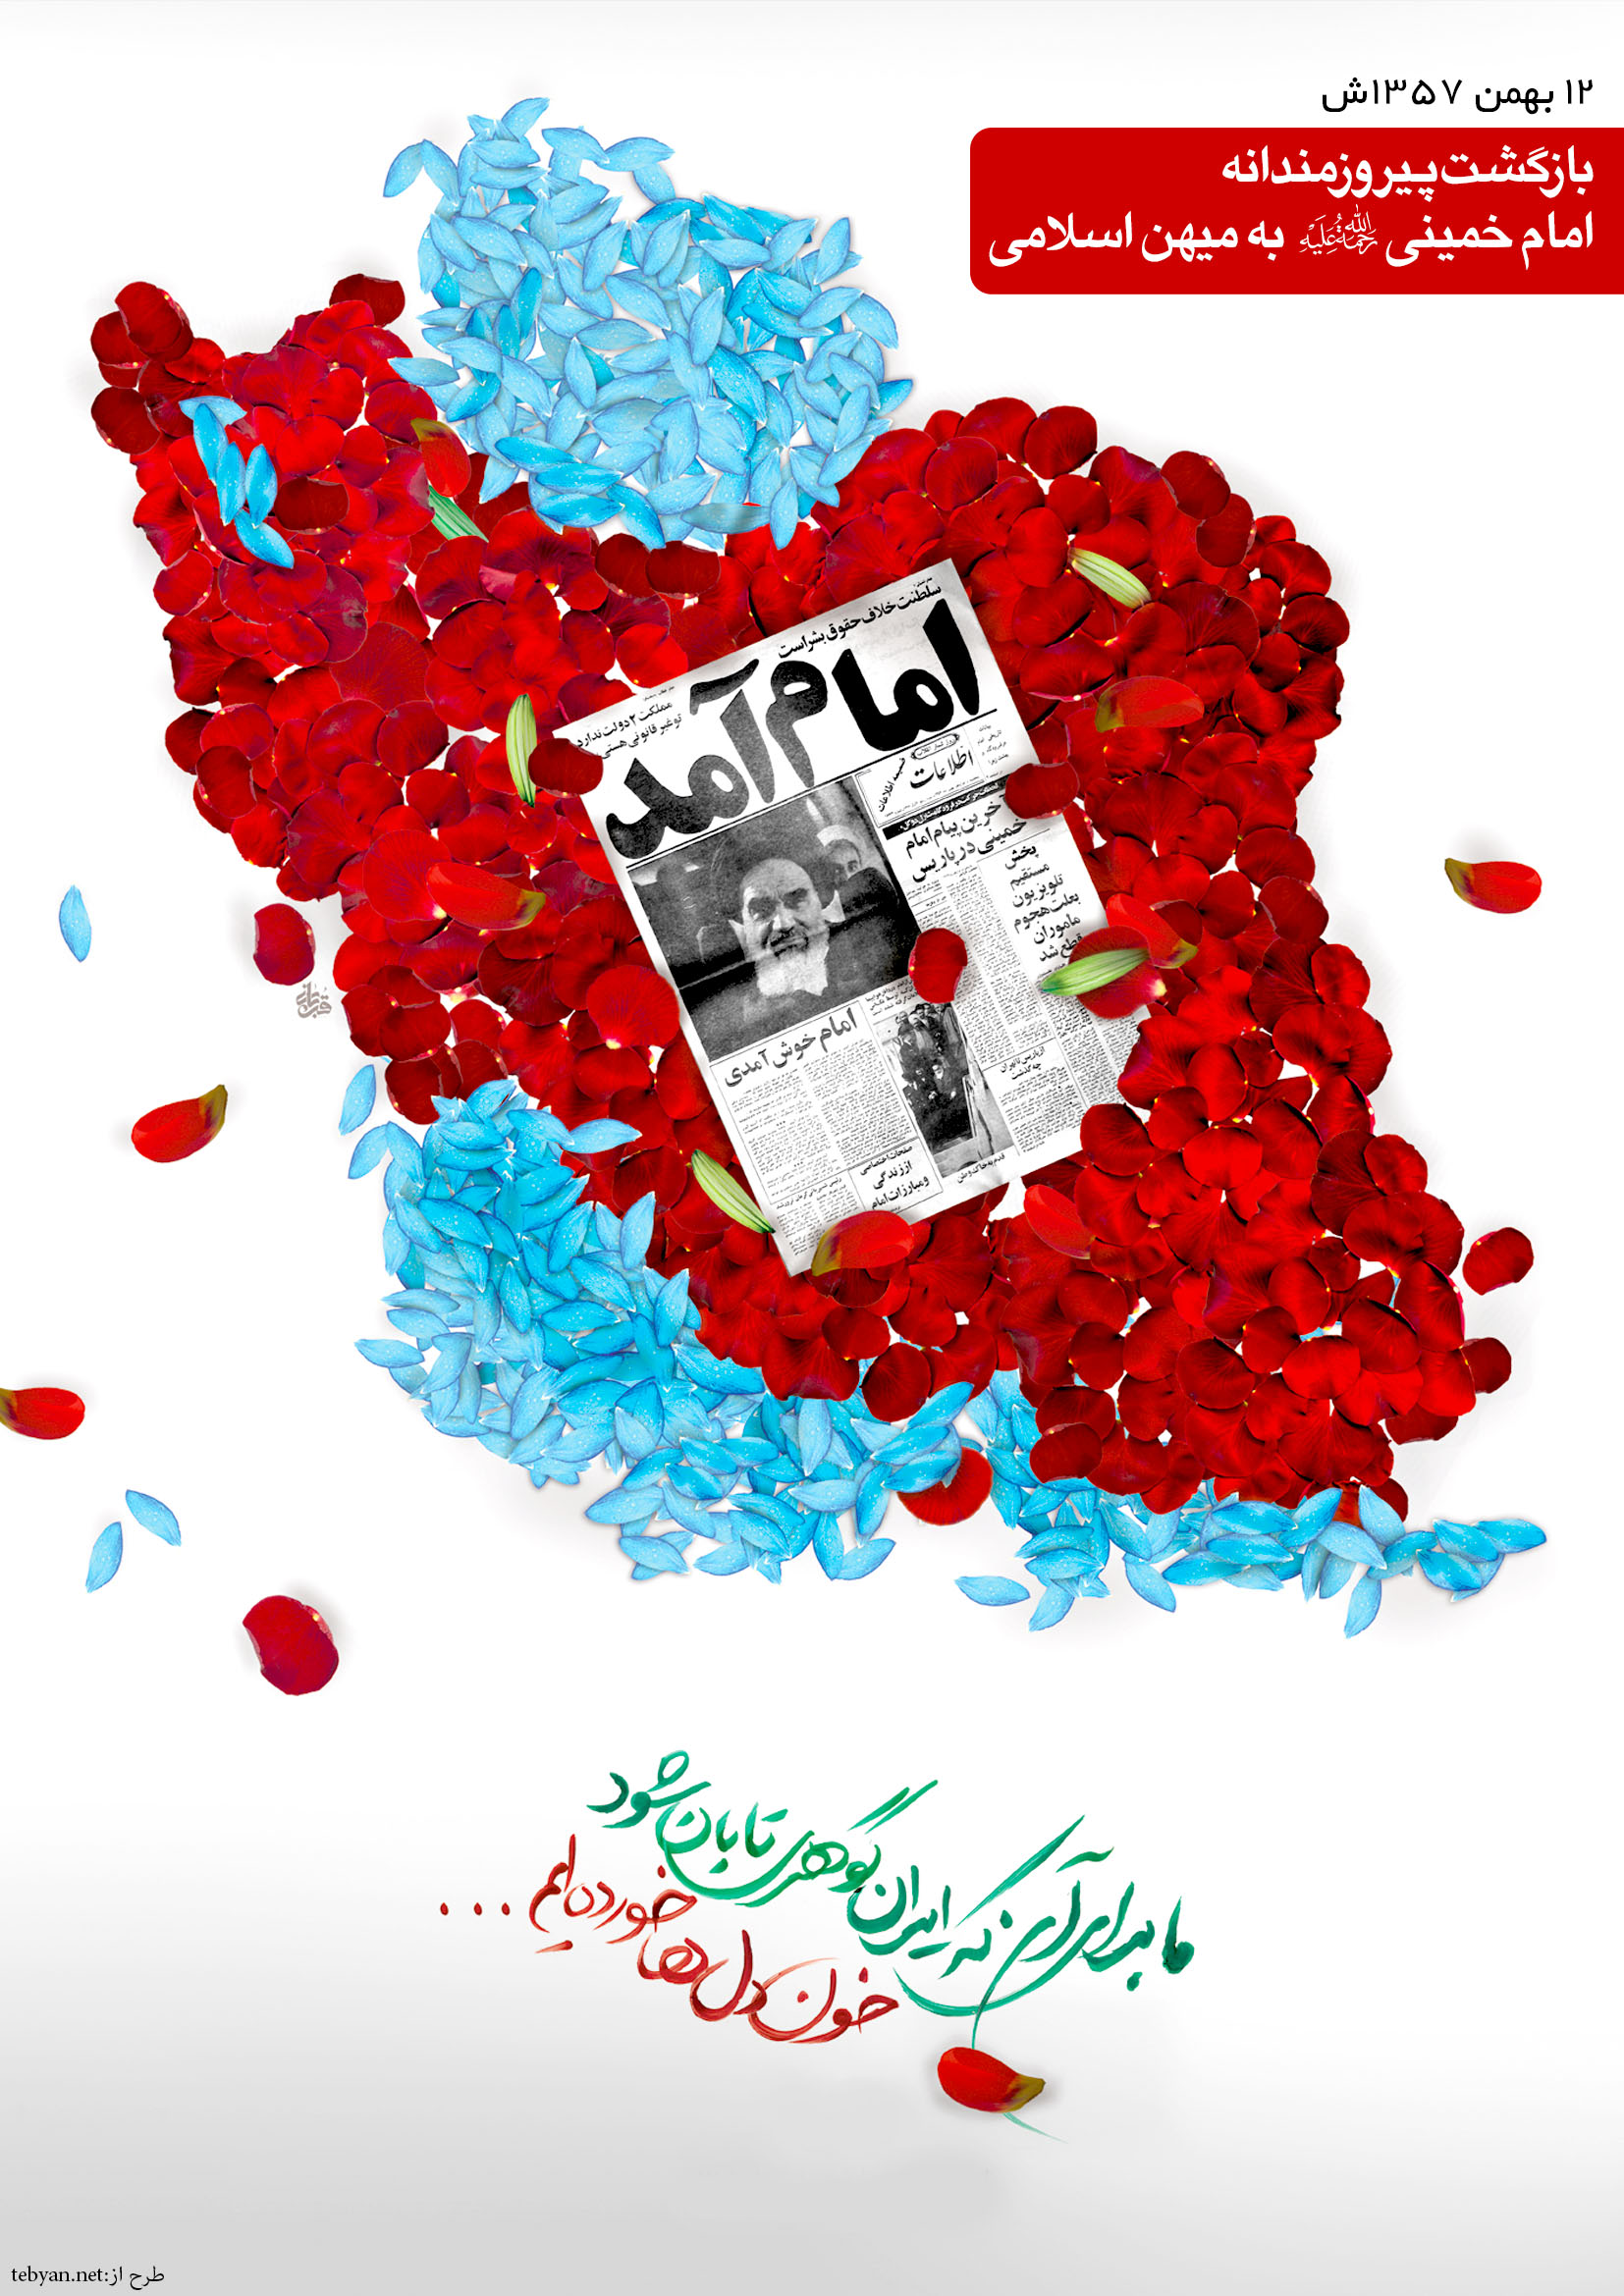 1486015259emem_khomeini2.jpg